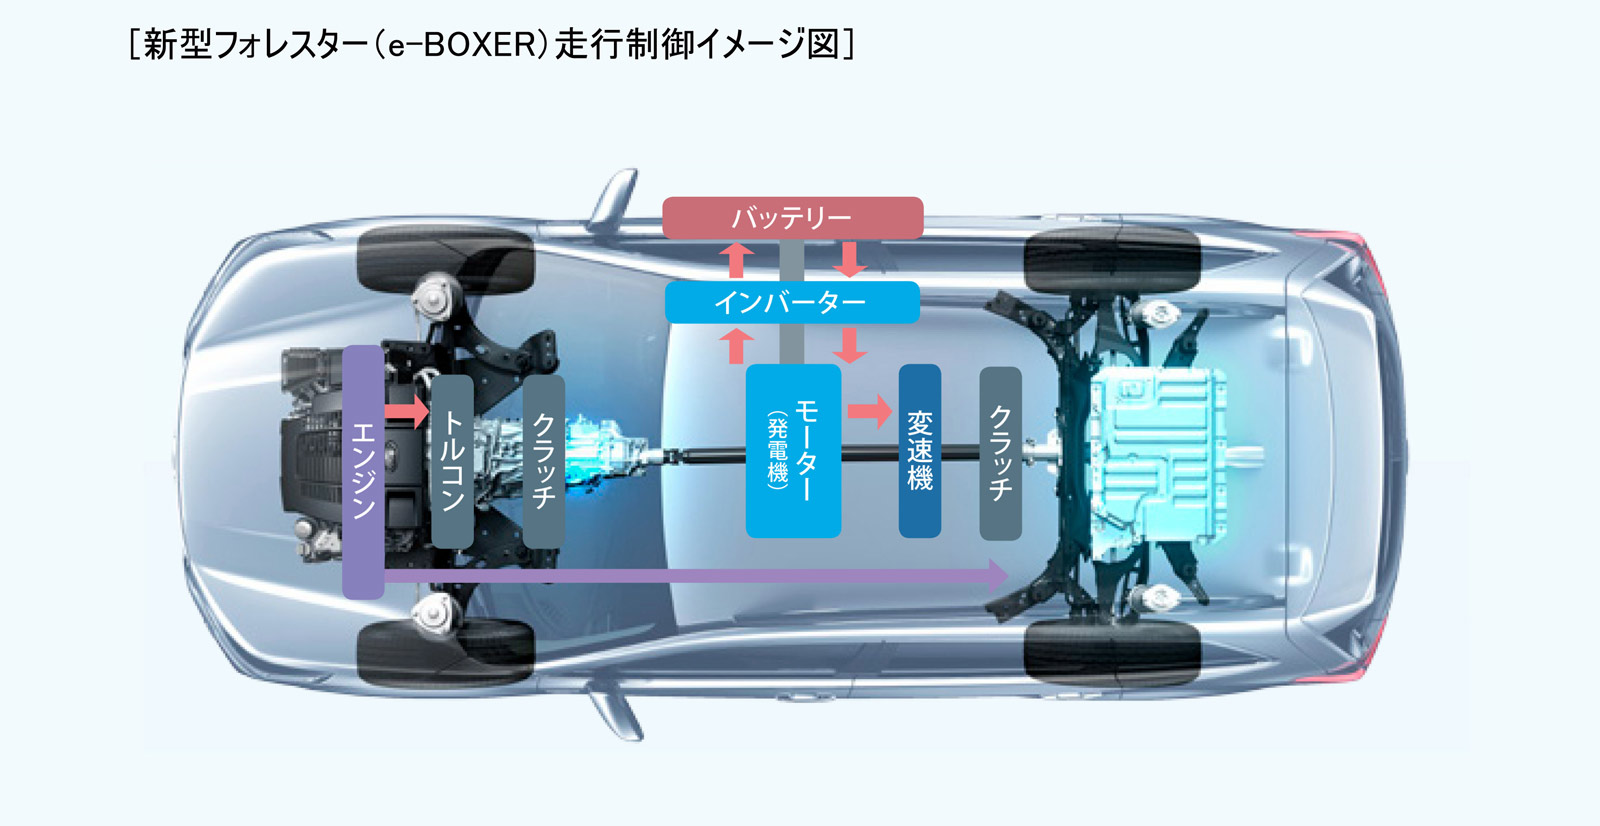 e-BOXER システム制御図